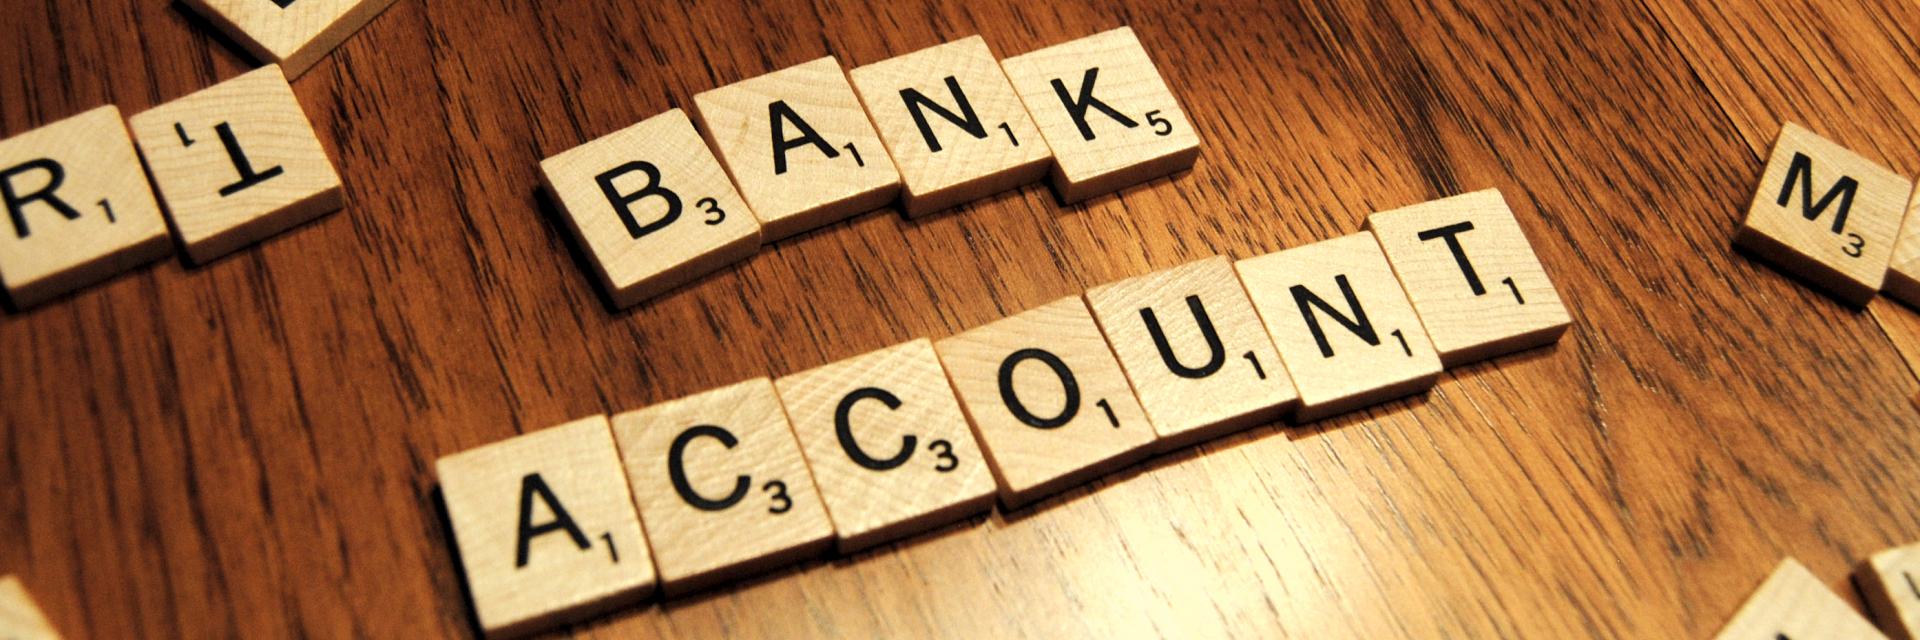 Bank account